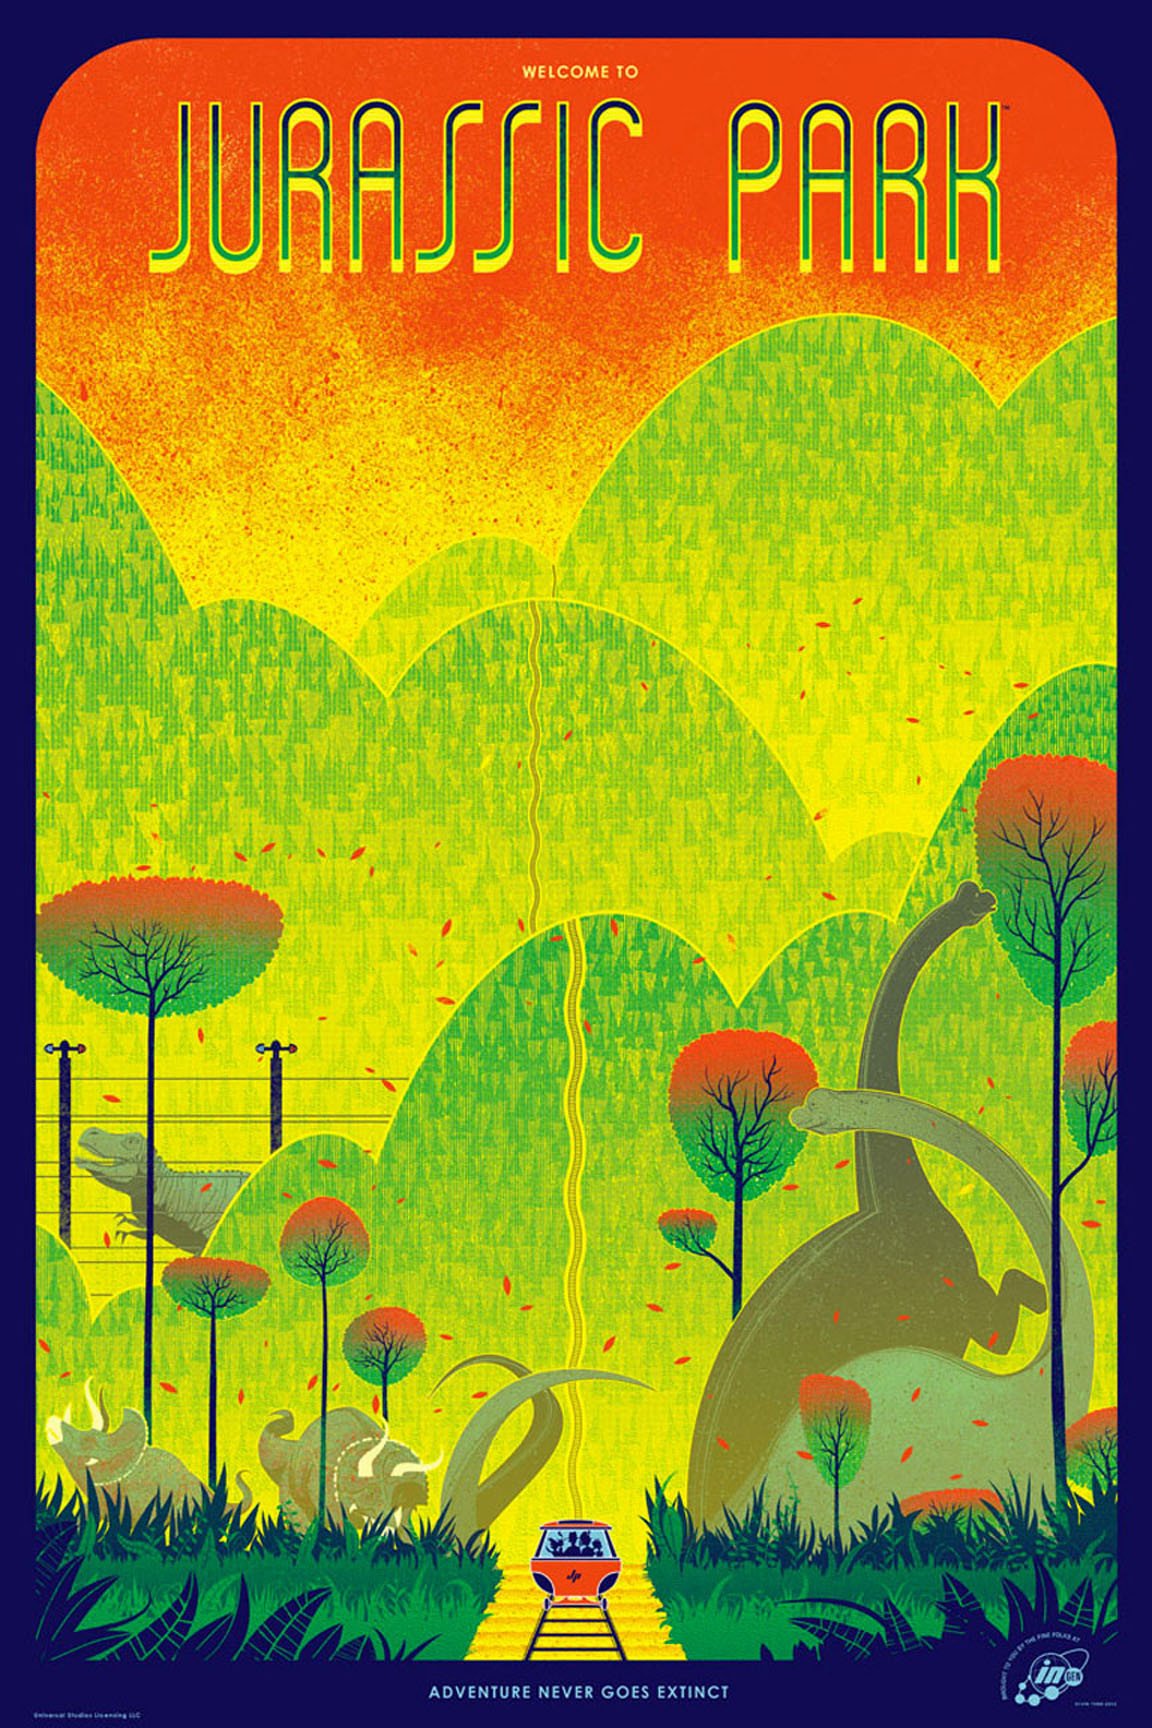 Tong's Mondo poster for Jurassic Park. (Image: Kevin Tong)